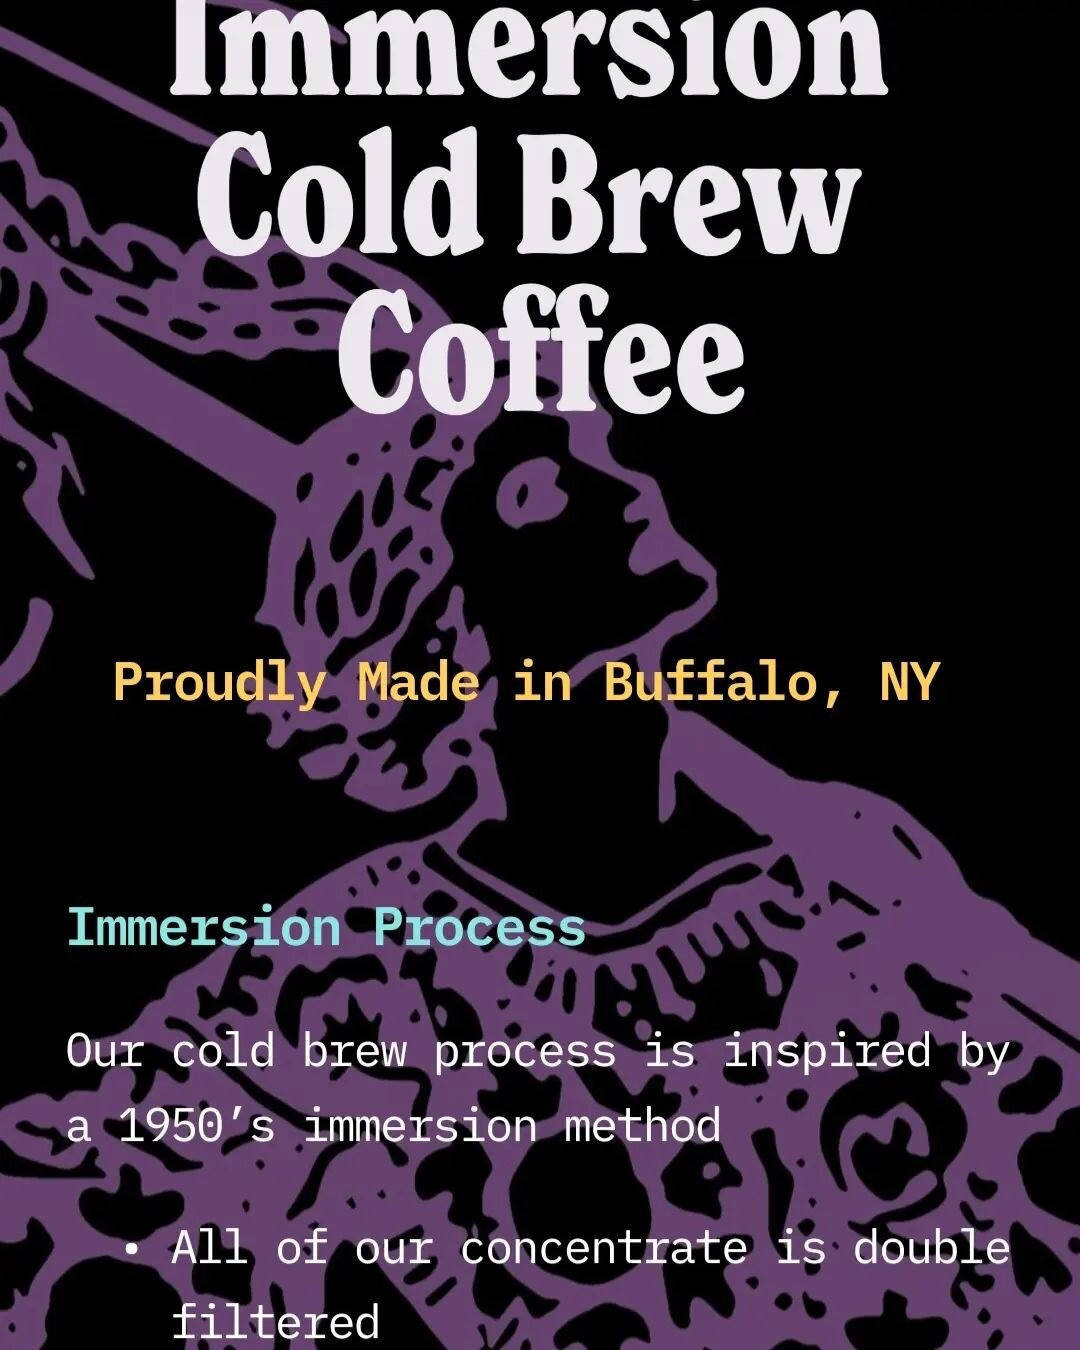 And we're live 🤟 website link in bio #staycaffeinated #coldbrew #foolishcoffee #buffalocoffeecommunity